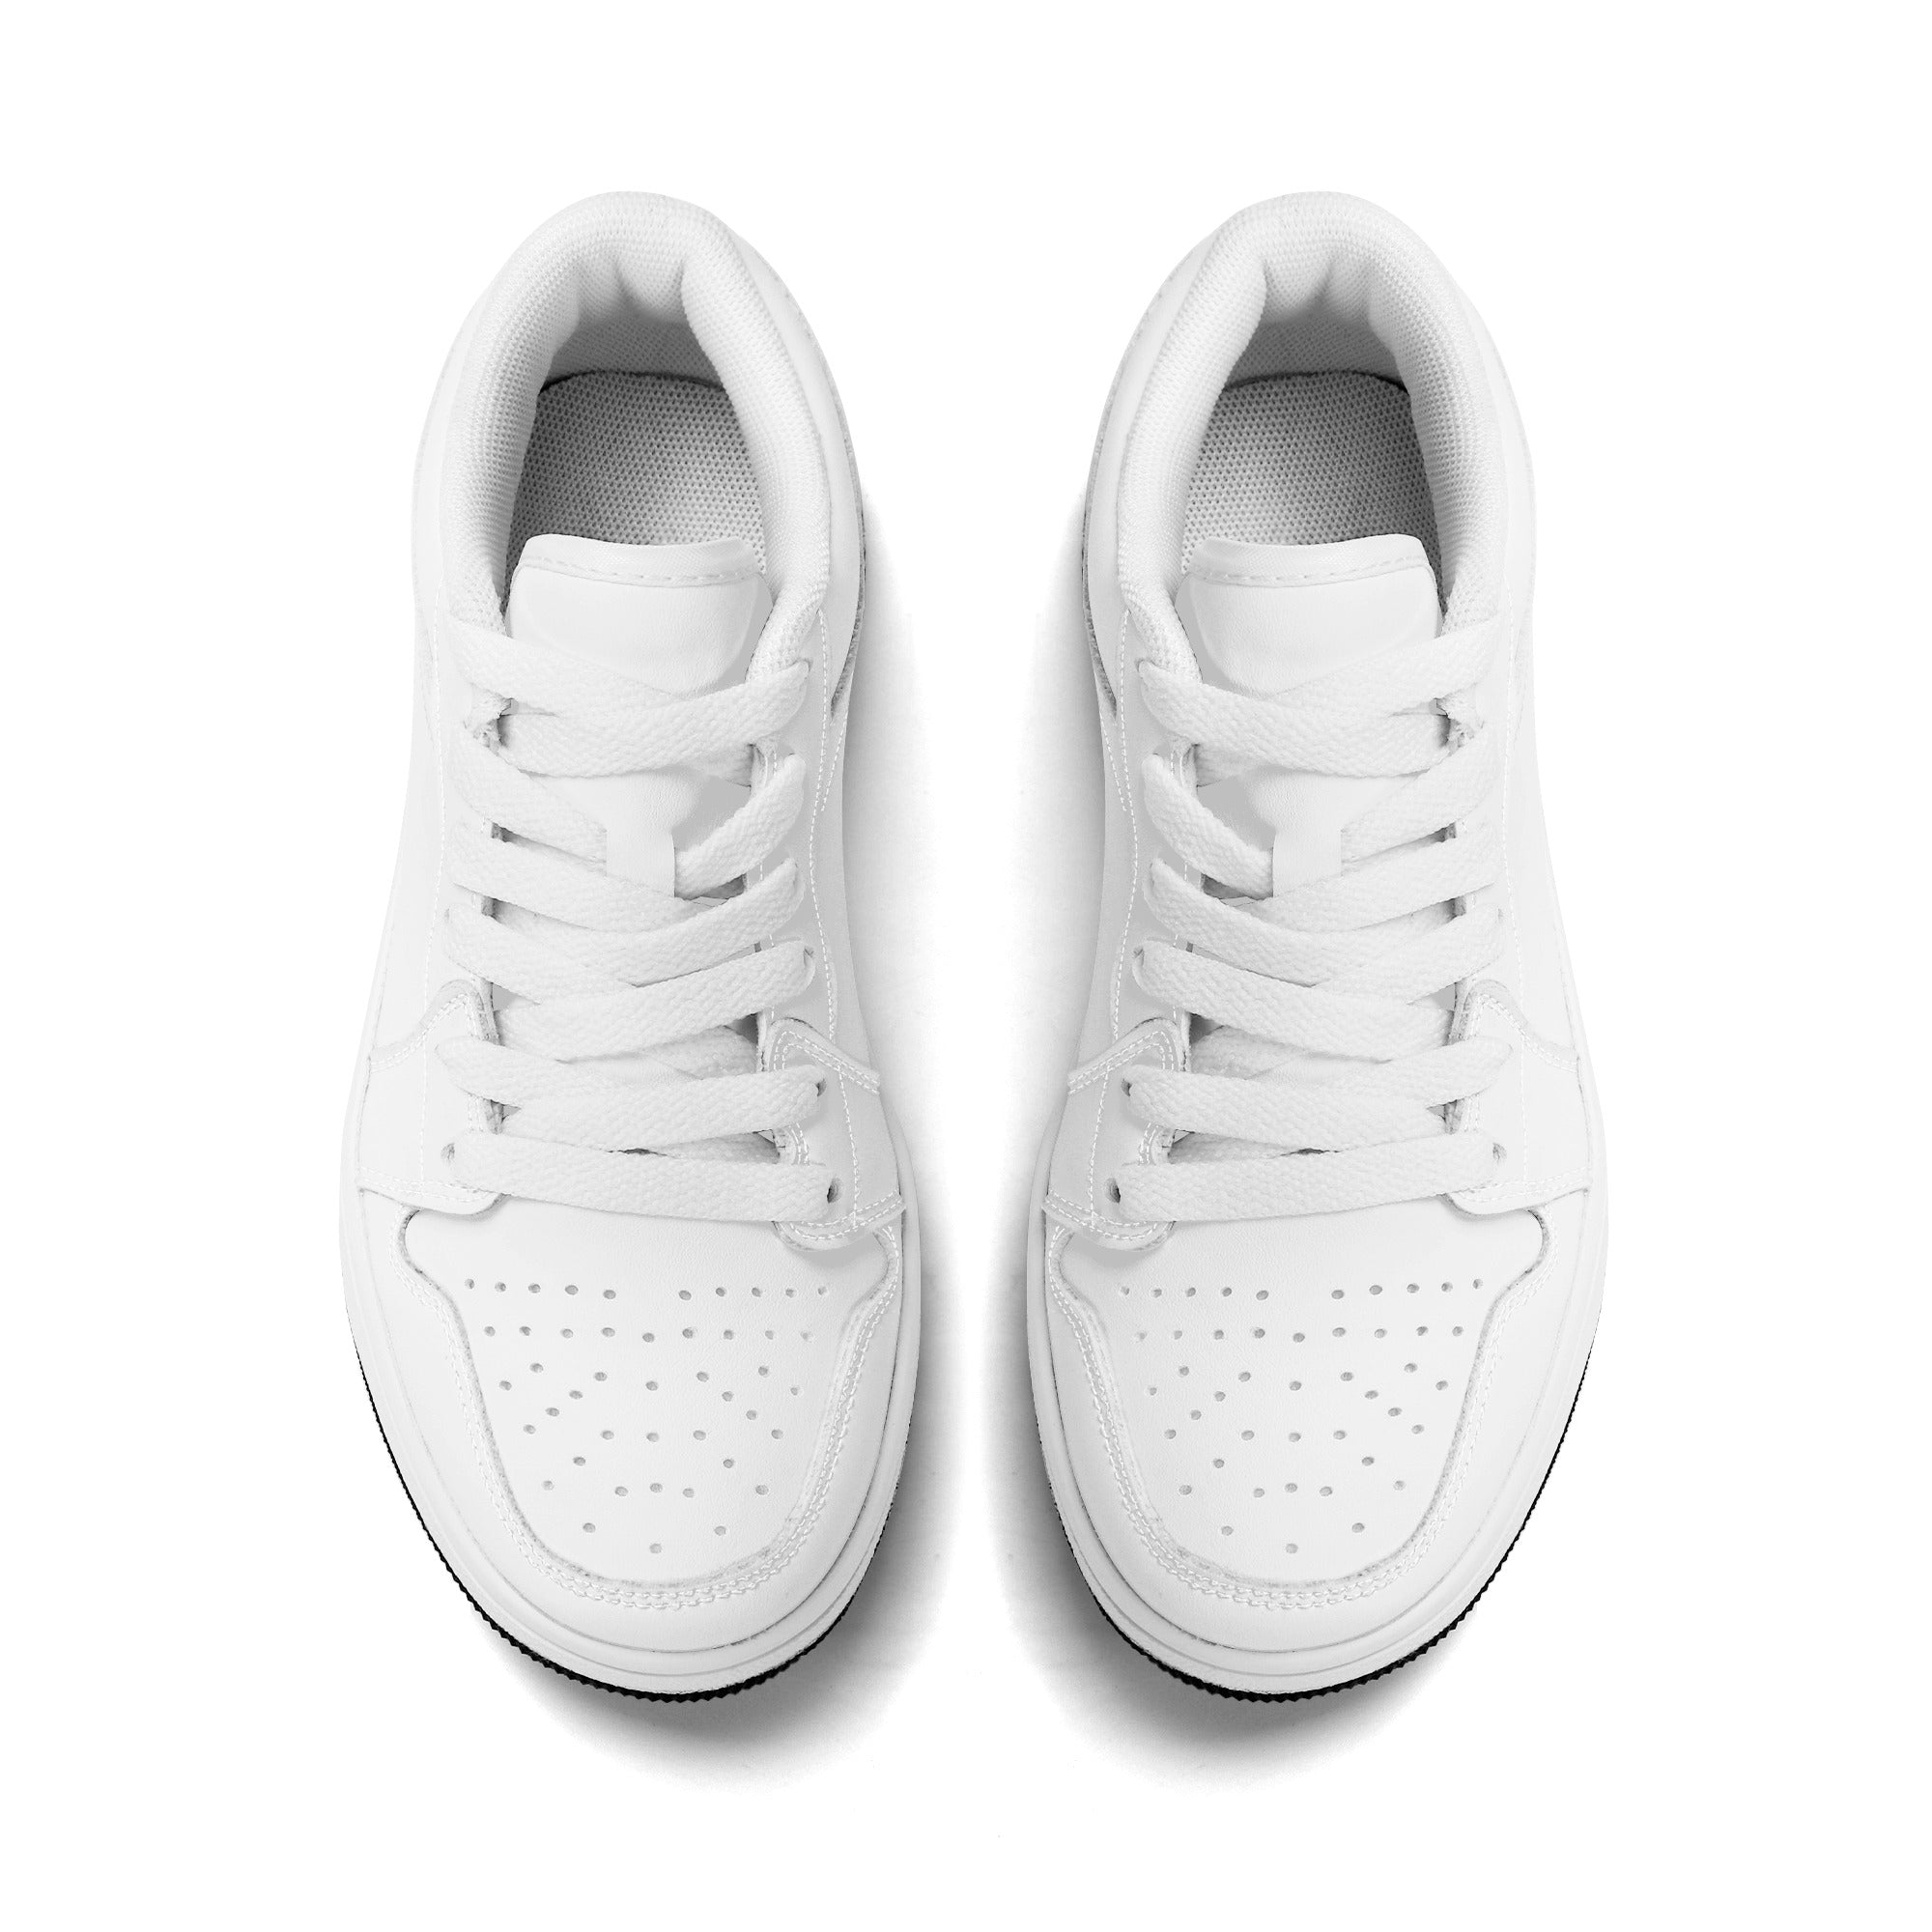 Kids Customizable Low Top Vegan Leather Sneakers | Design your own | Shoe Zero